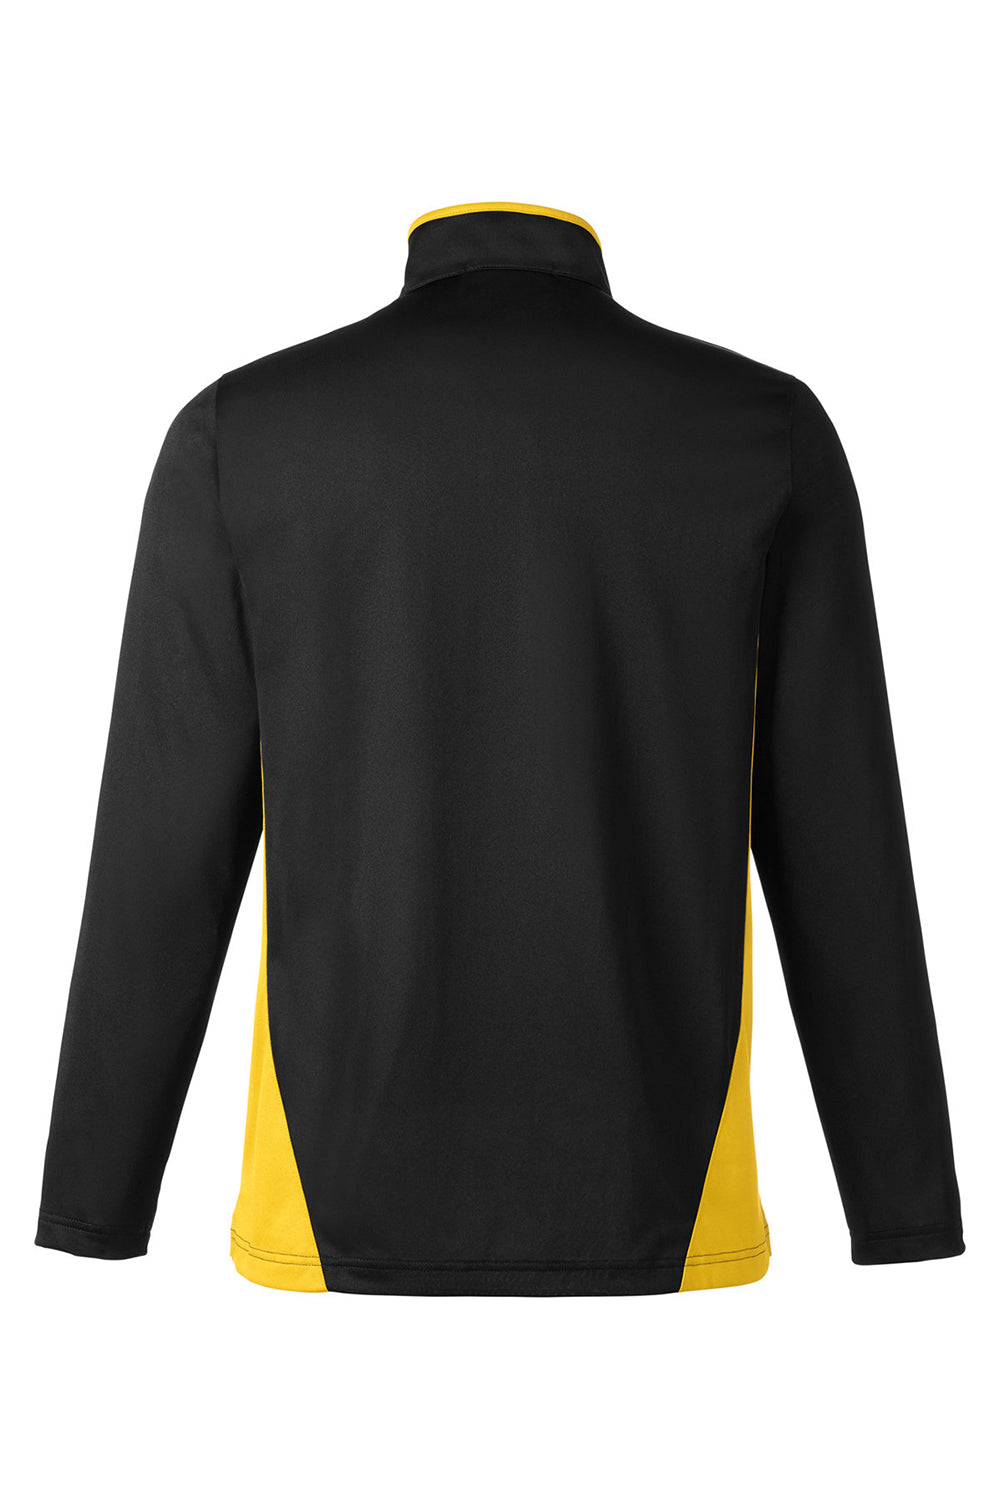 Harriton M786 Mens Flash Performance Moisture Wicking Colorblock 1/4 Zip Sweatshirt Black/Sunray Yellow Flat Back